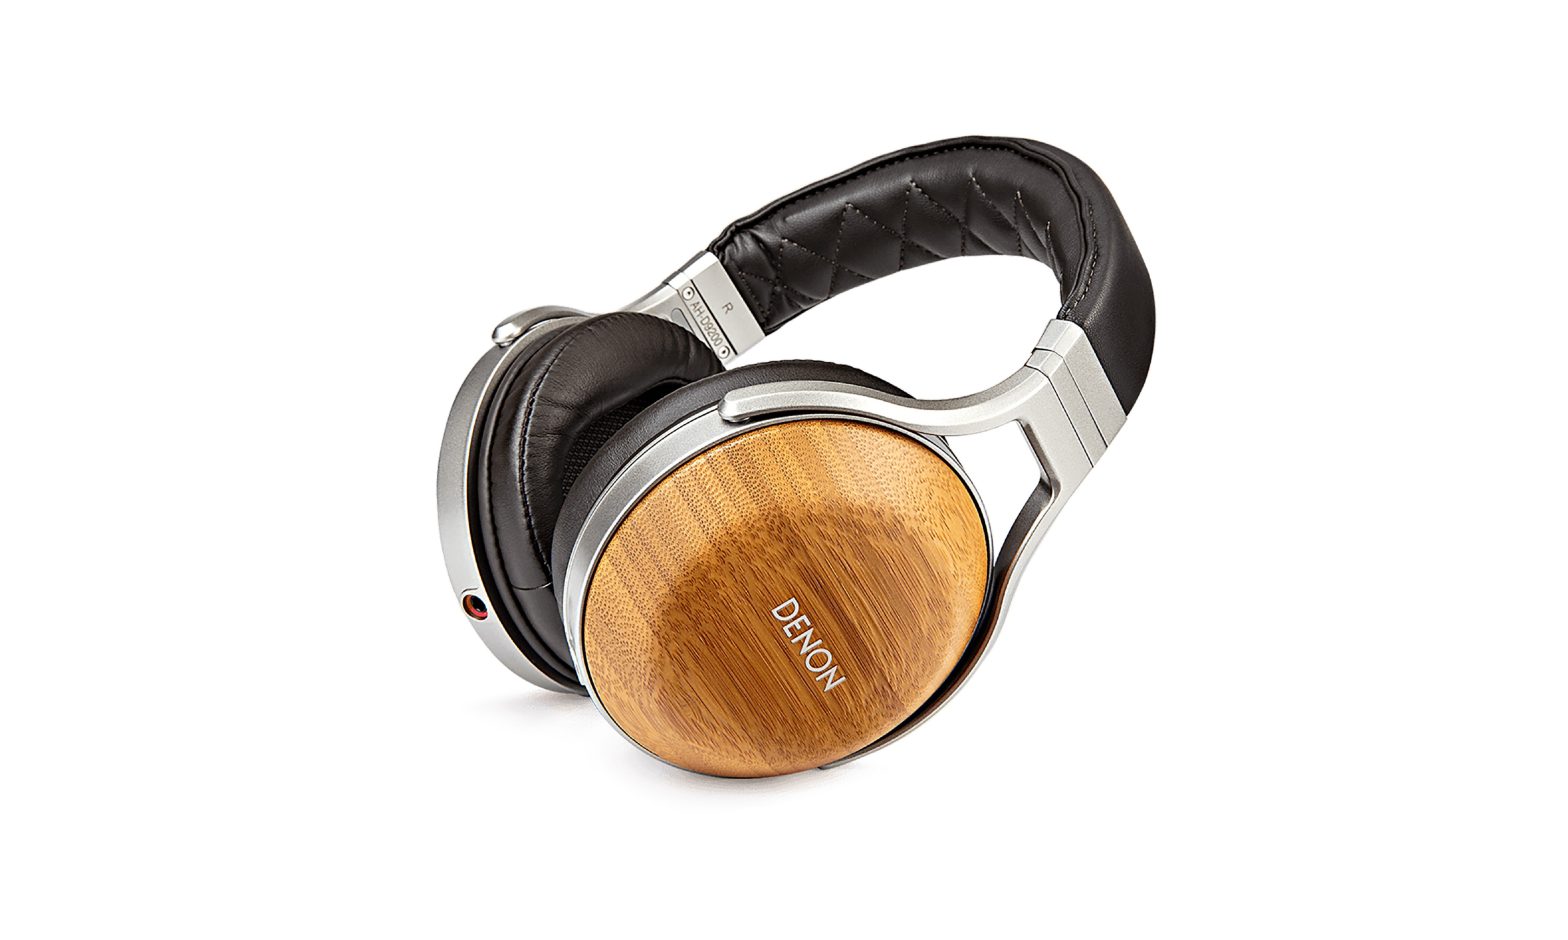 DENON AH-D9200 Bamboo Over-Ear Premium Headphones User Manual